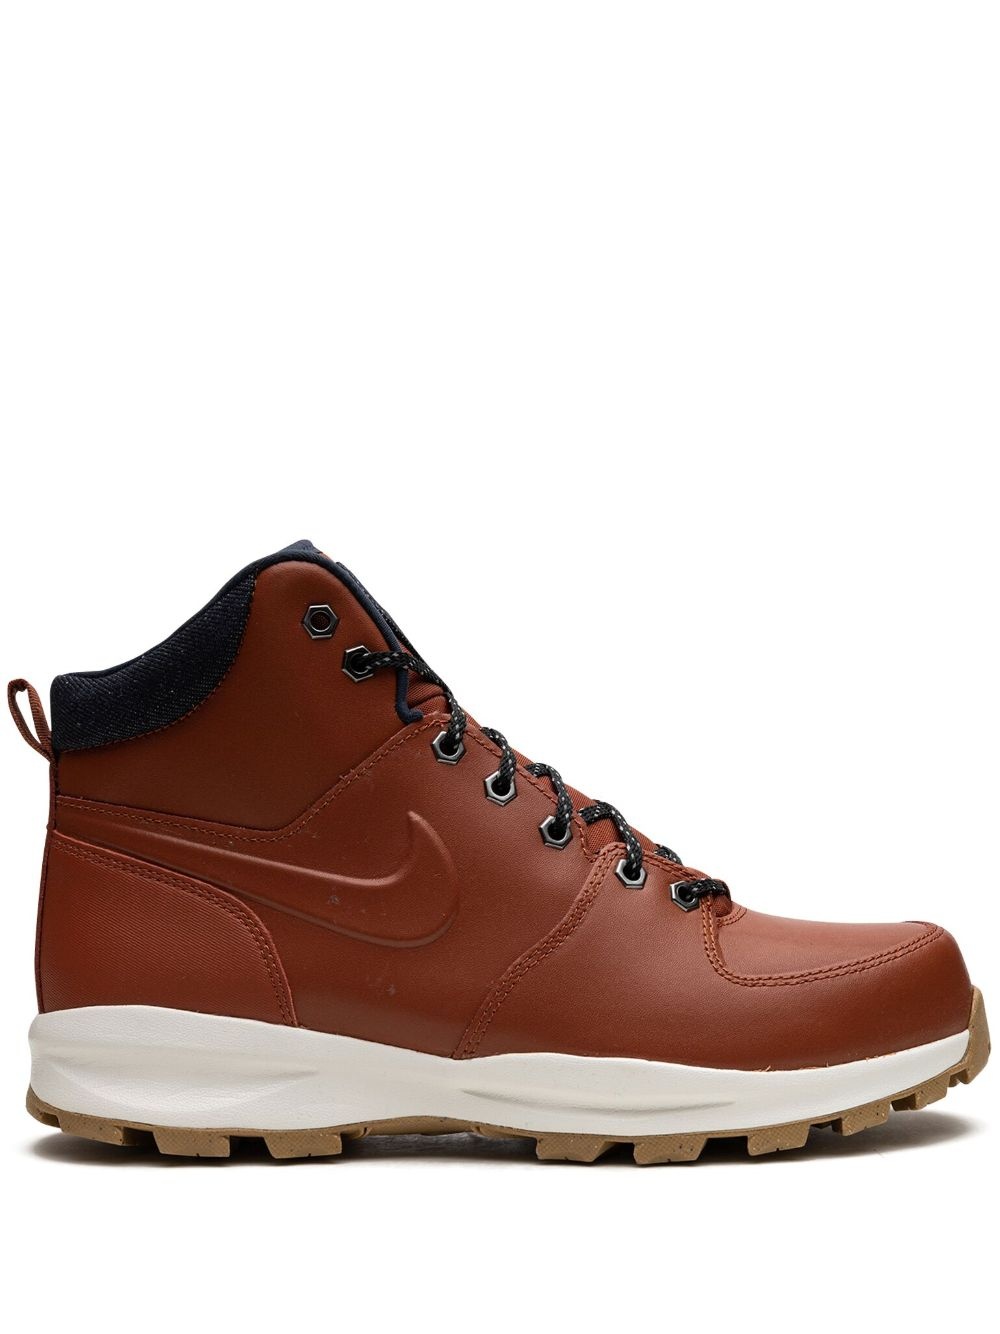 Manoa leather SE "Rugged Orange" boots - 1